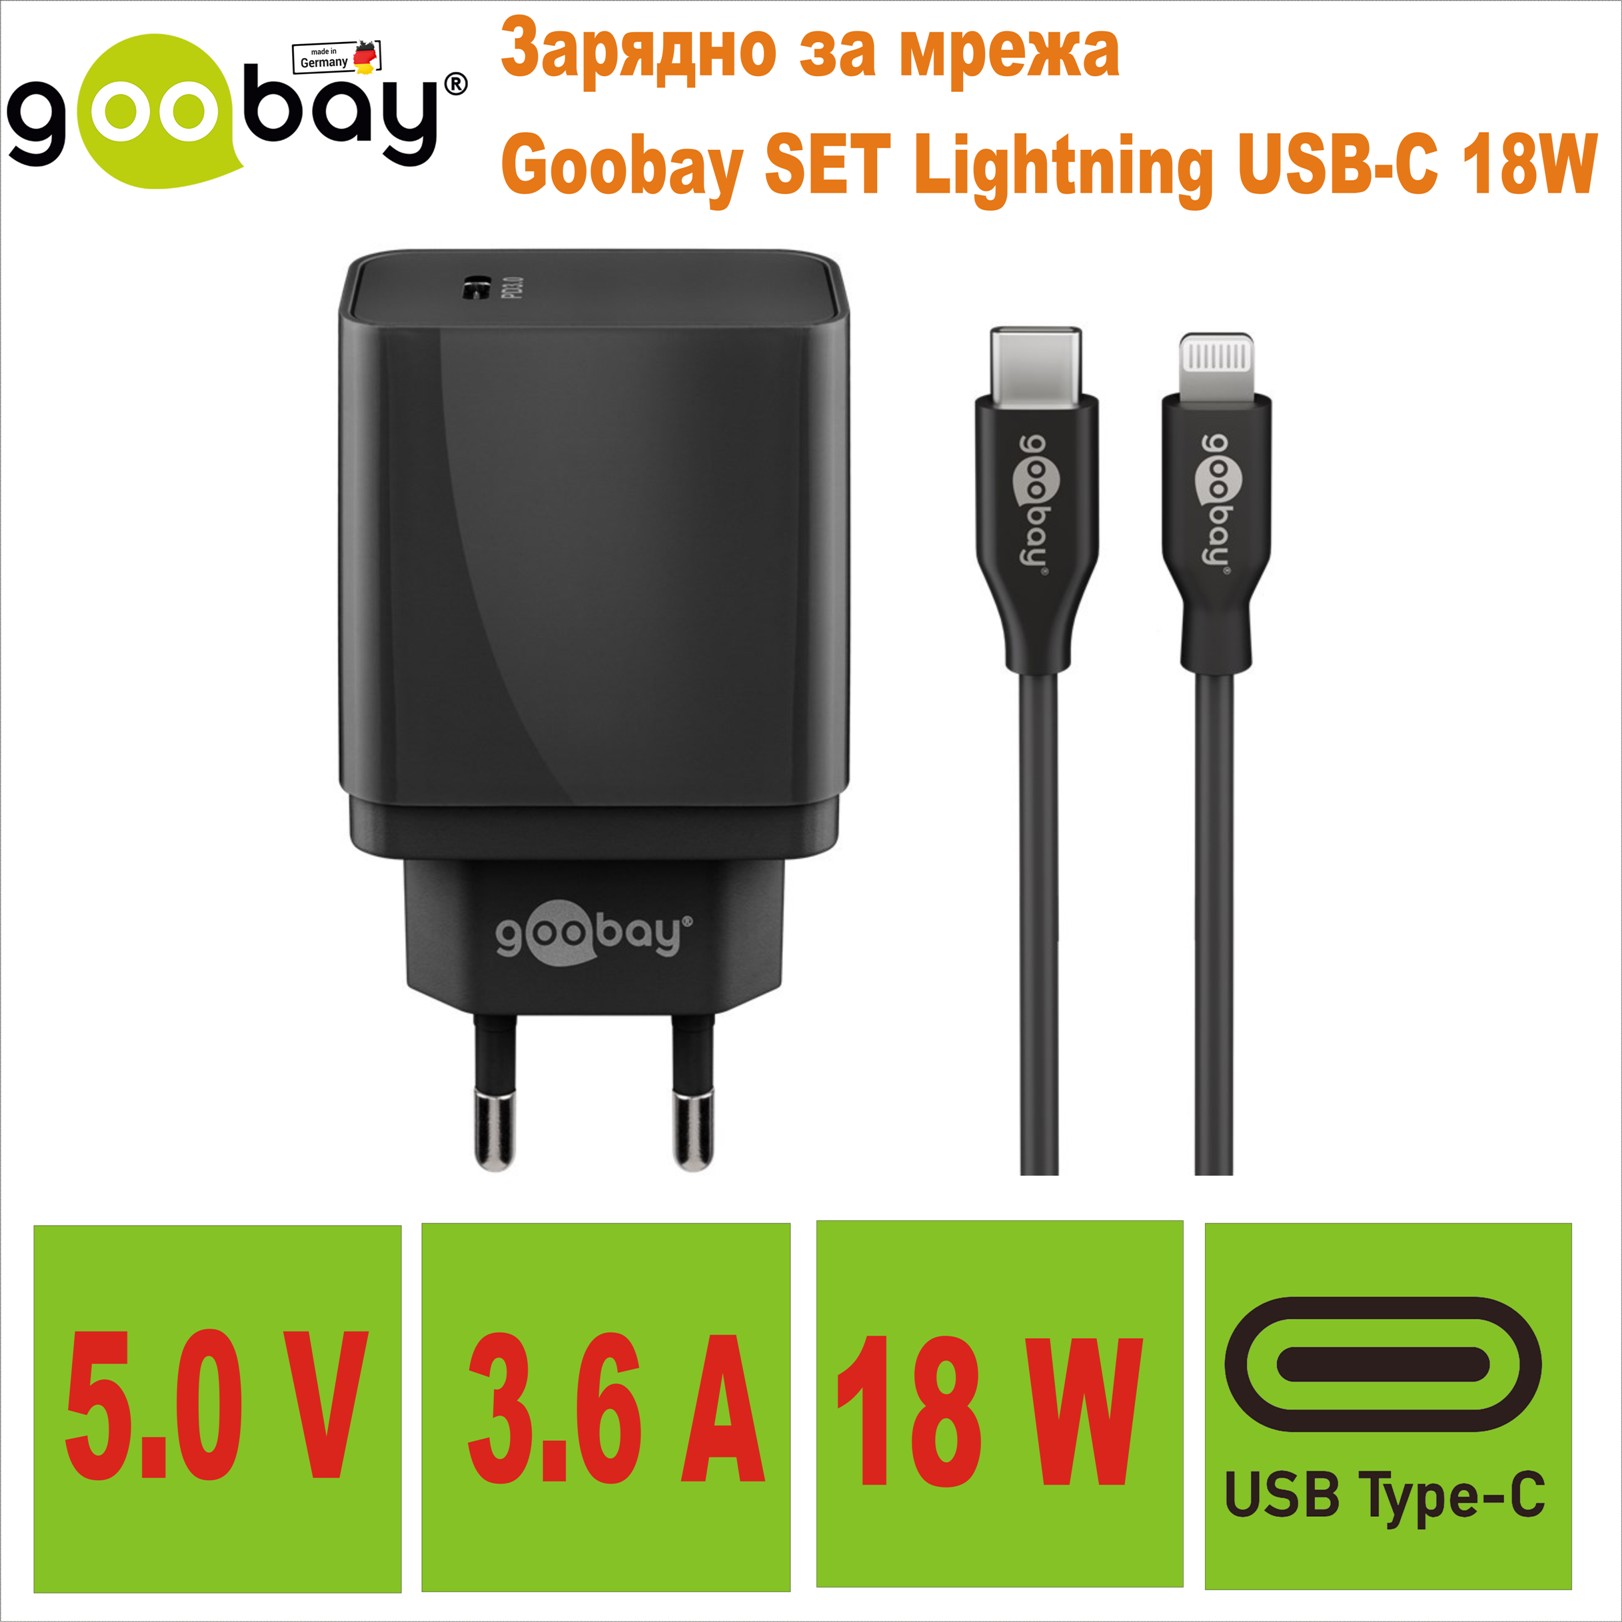 3.6A, 18W, USB-C, SET Lightning Goobay 44980